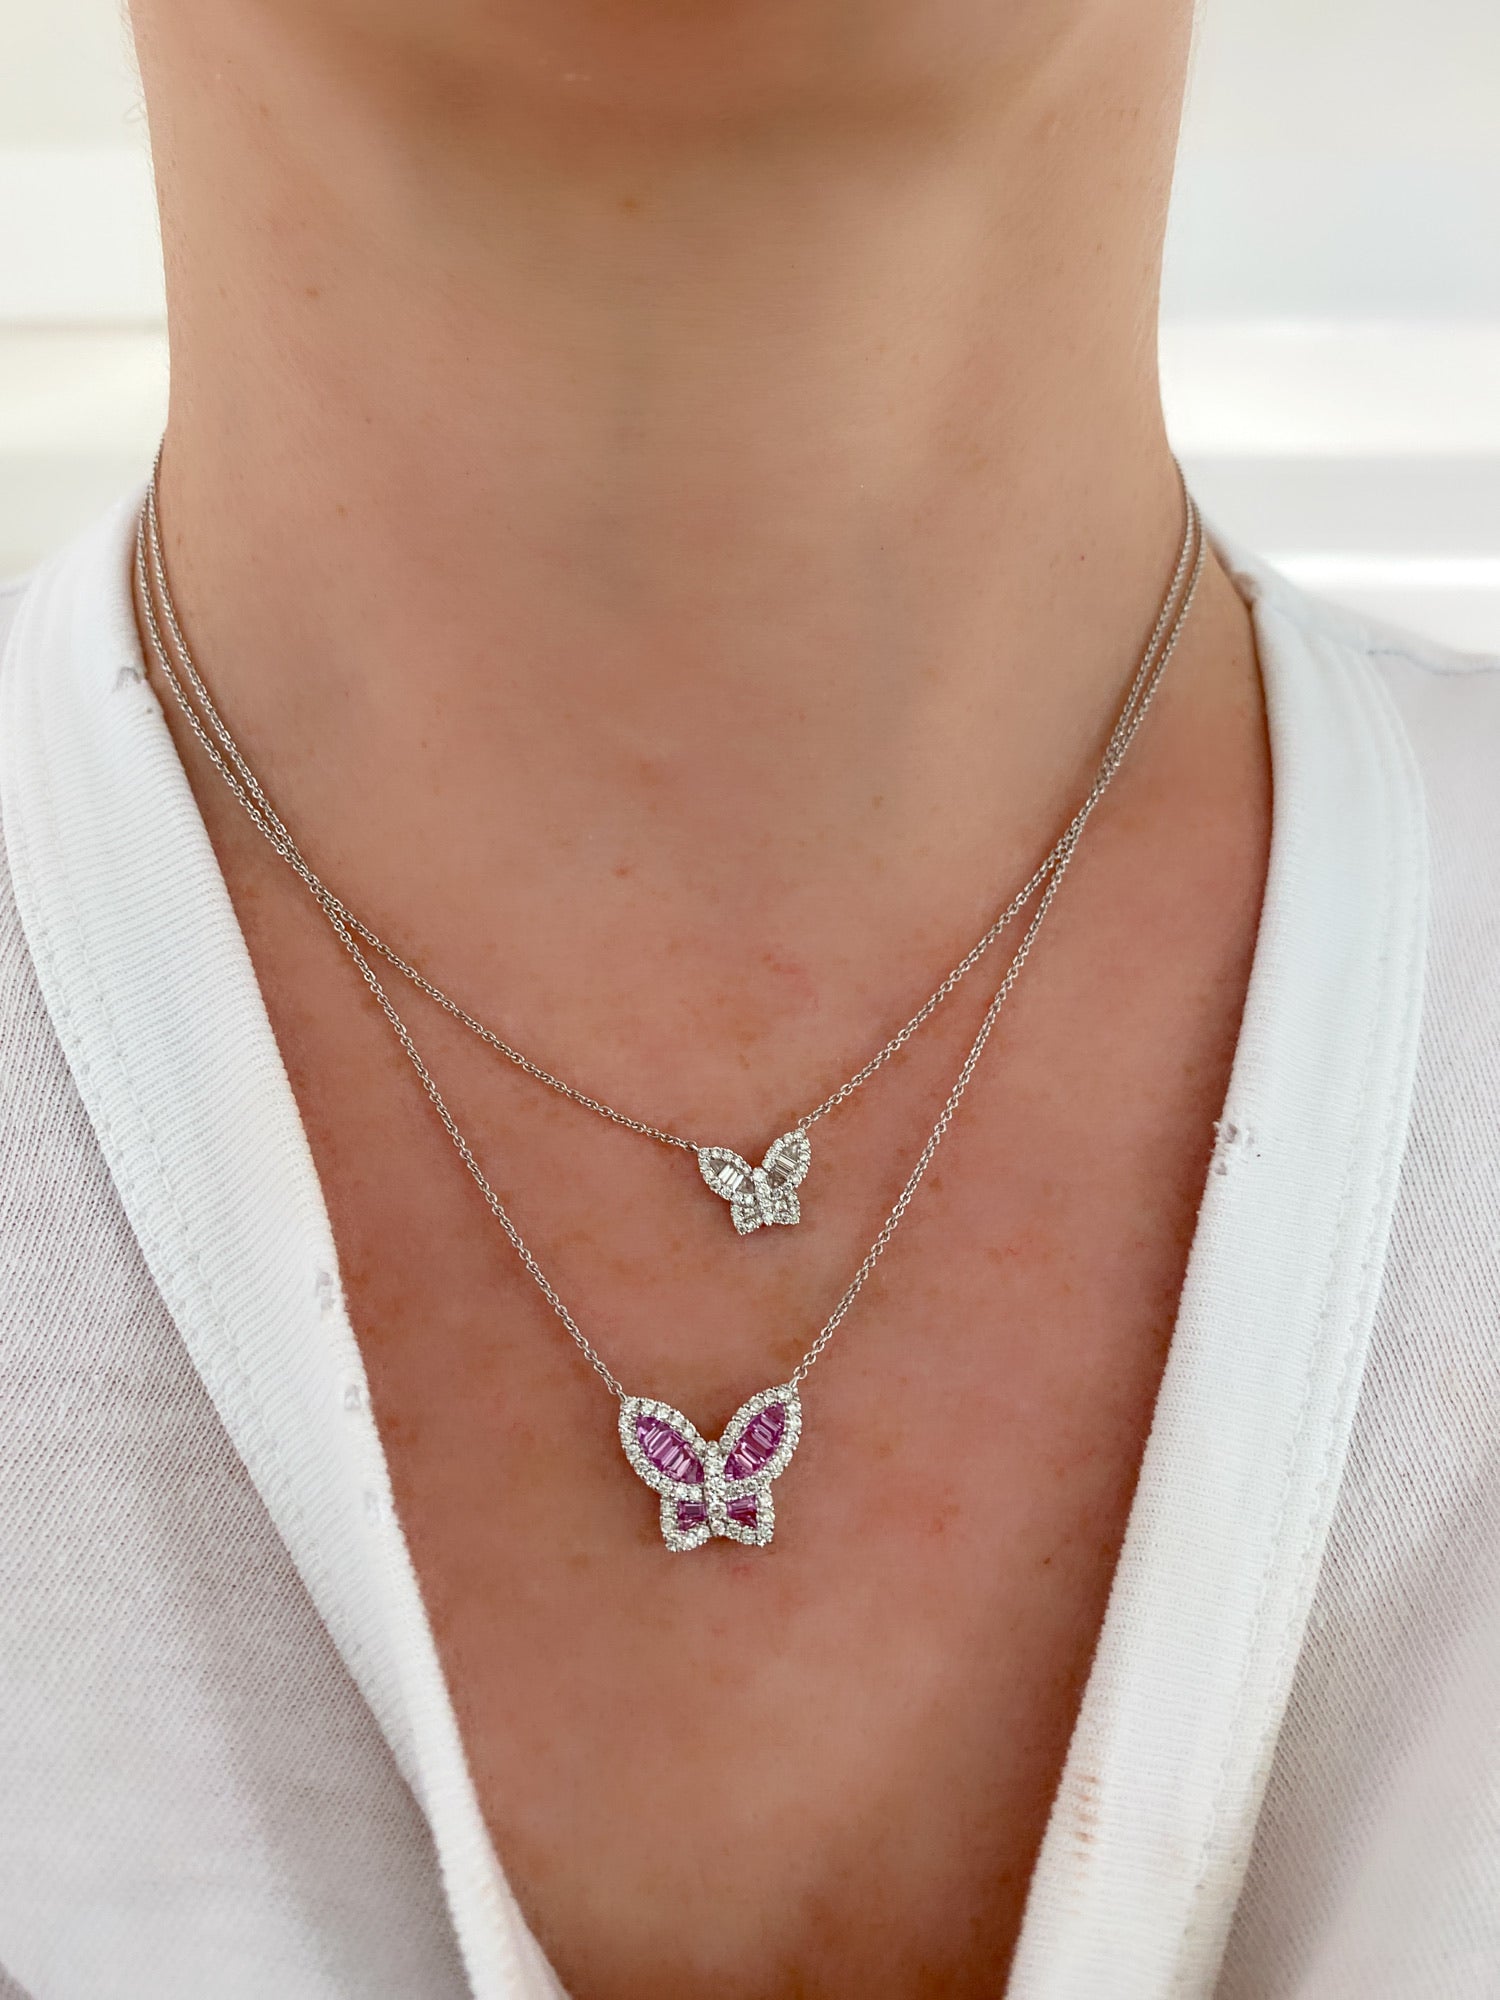 Pink Sapphire Heart Pendant 18k Rose Gold – Deliqa Gems